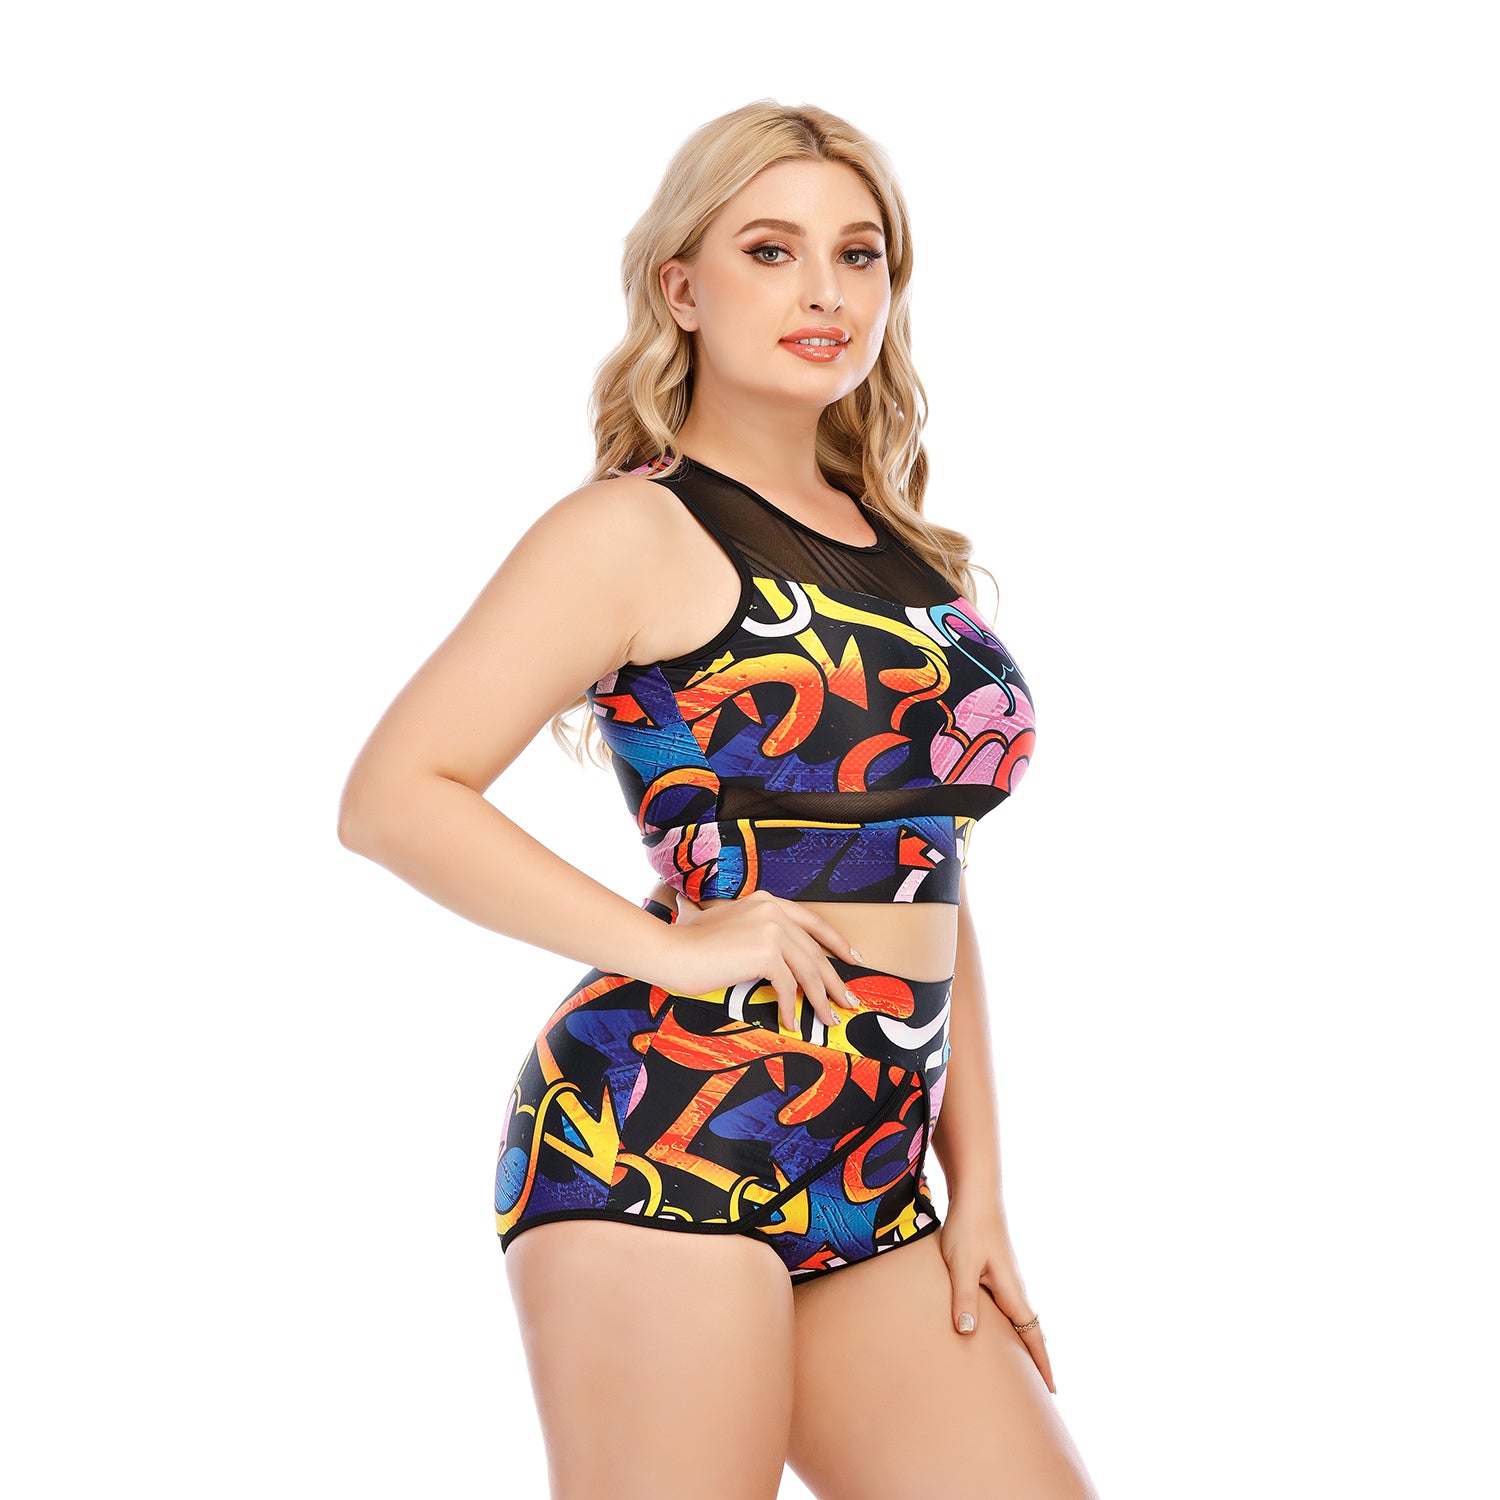 SiySiy Women's Plus Size Two Piece Crew Neck Sleeveless Swimwear Triangle Bottom Letter Color Pattern Swimsuit